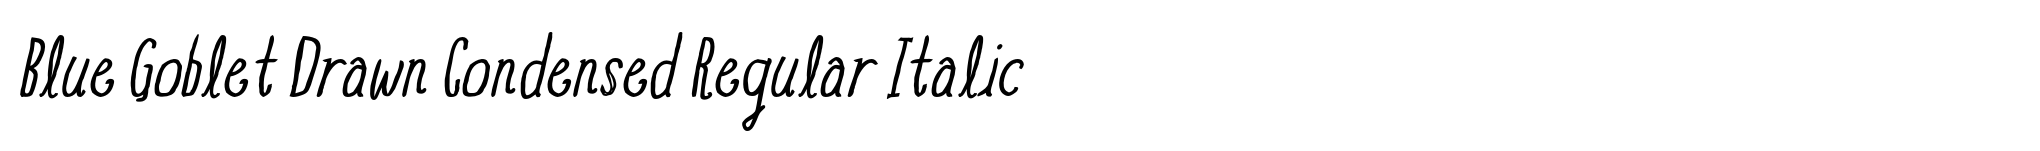 Blue Goblet Drawn Condensed Regular Italic image